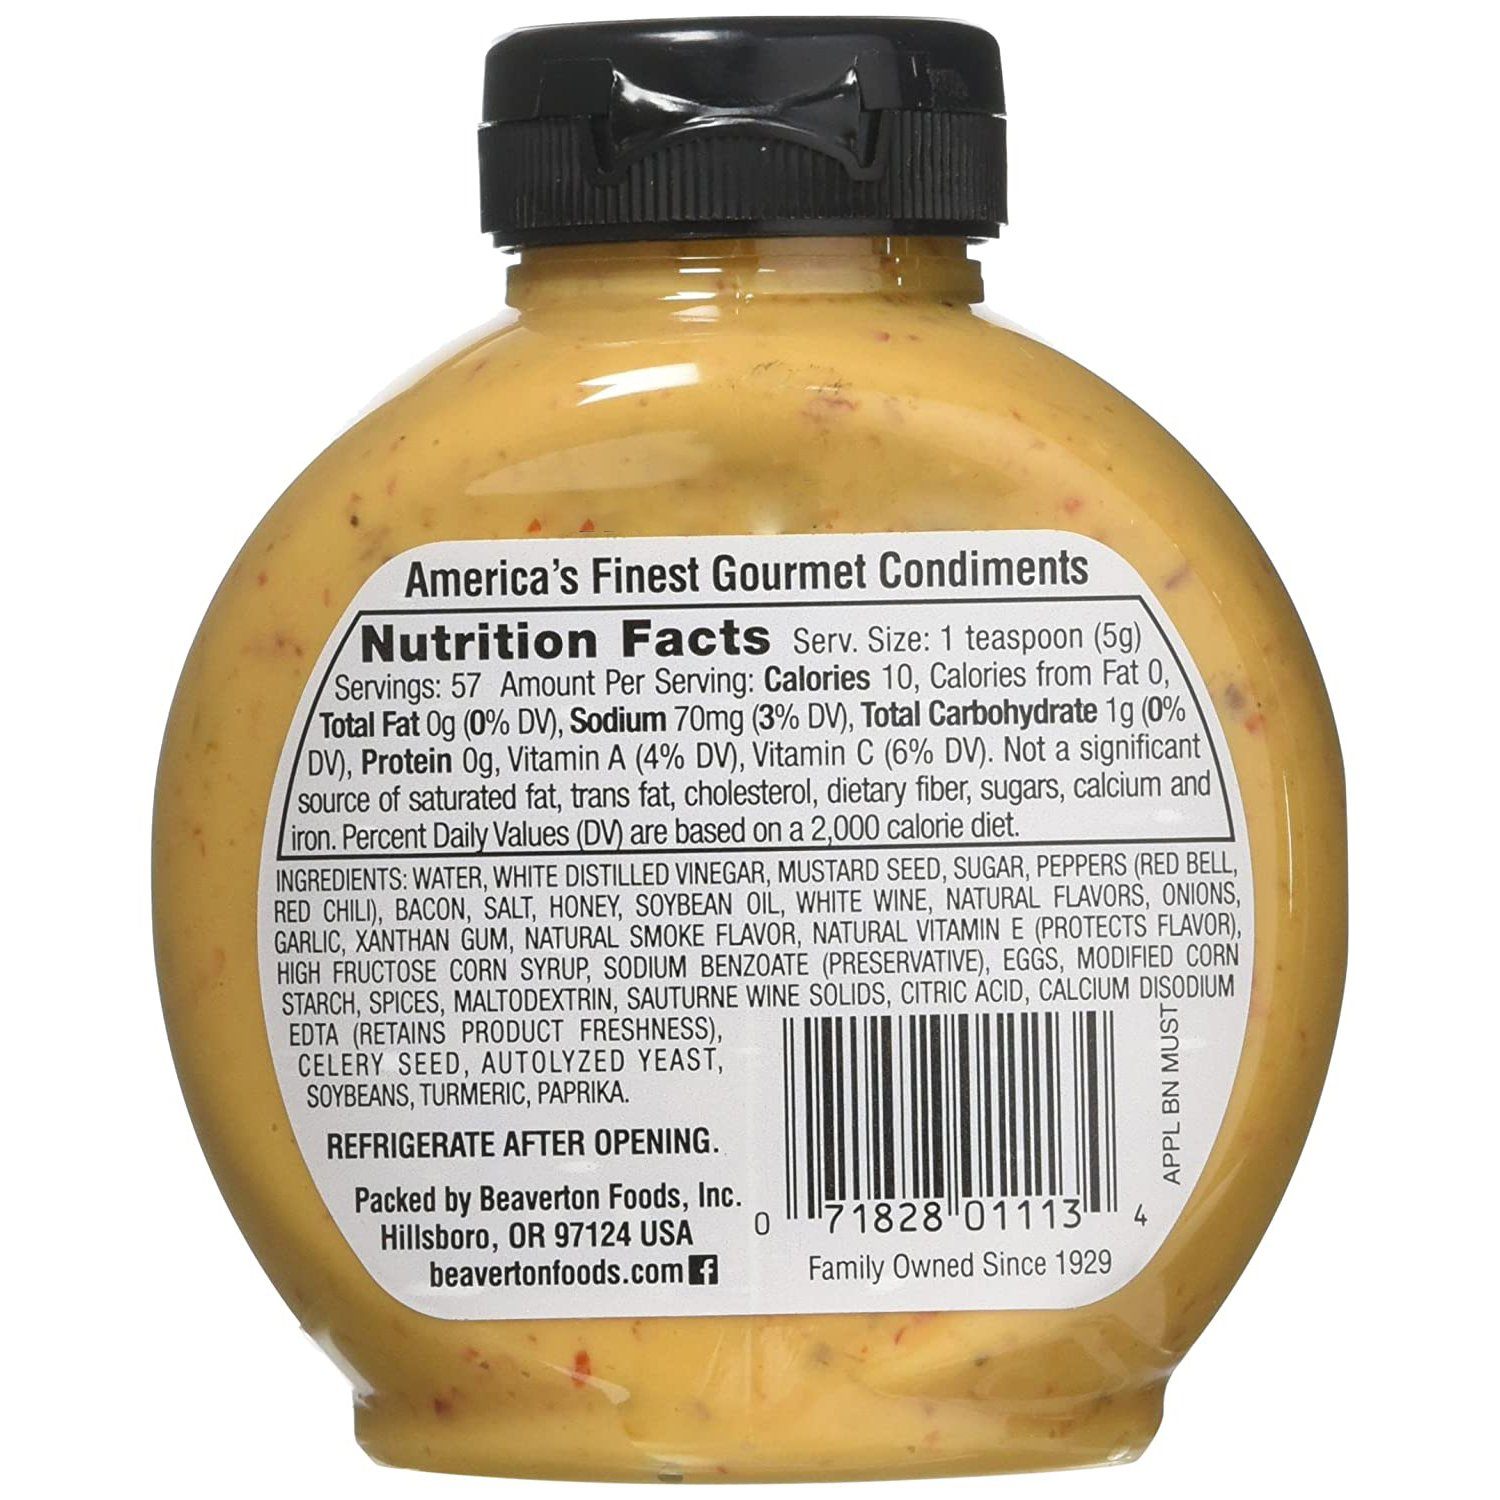 Try Me Gourmet Tiger Original Sauce, 10 Fluid Ounce Bottle -- 6 per case